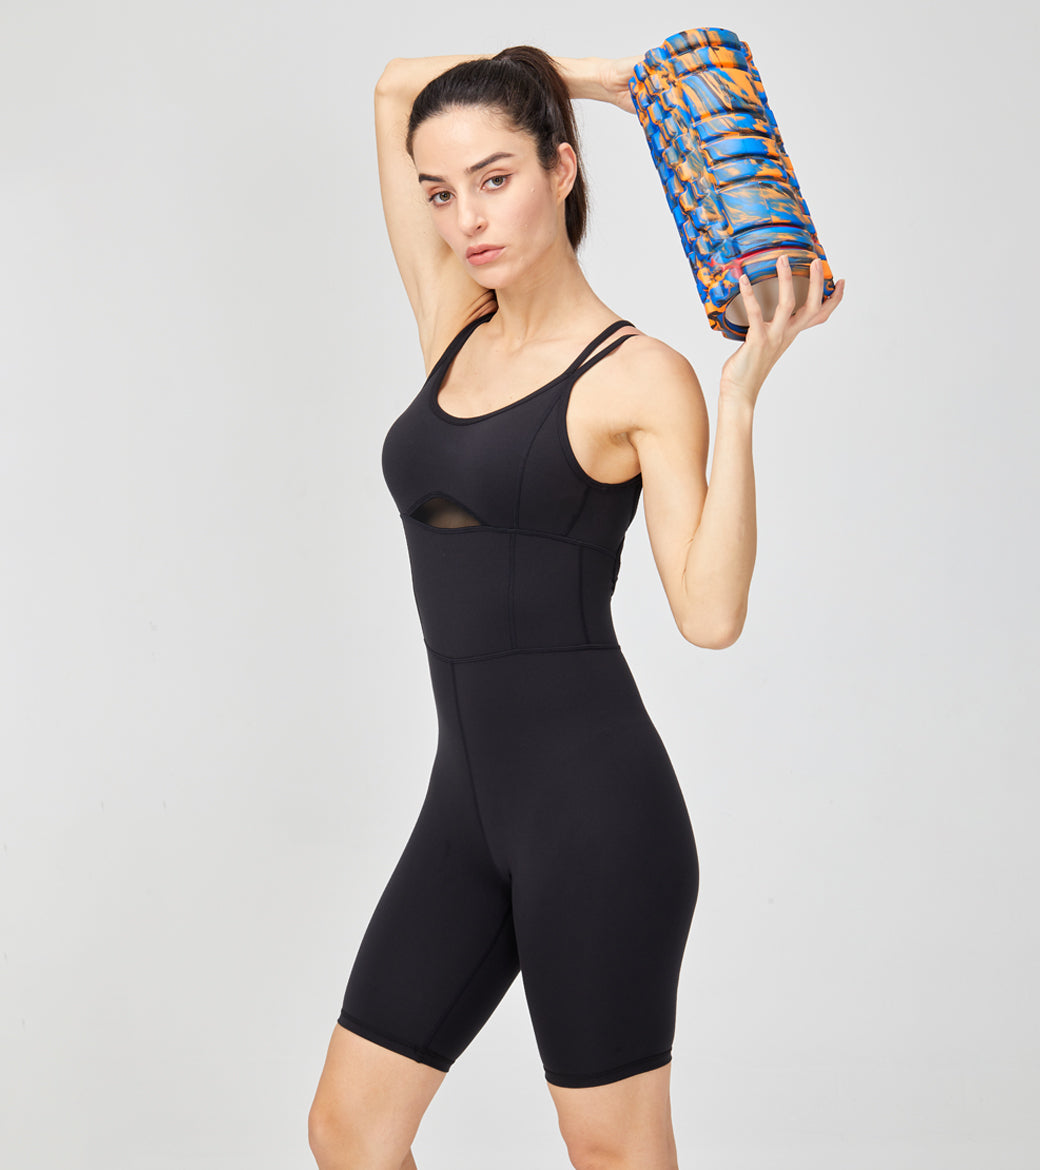 LOVESOFT Yoga Romper for Women Sports spaghetti Backless Jumpsuits Shorts Sleeveless Gym Bodysuit Dance Unitard